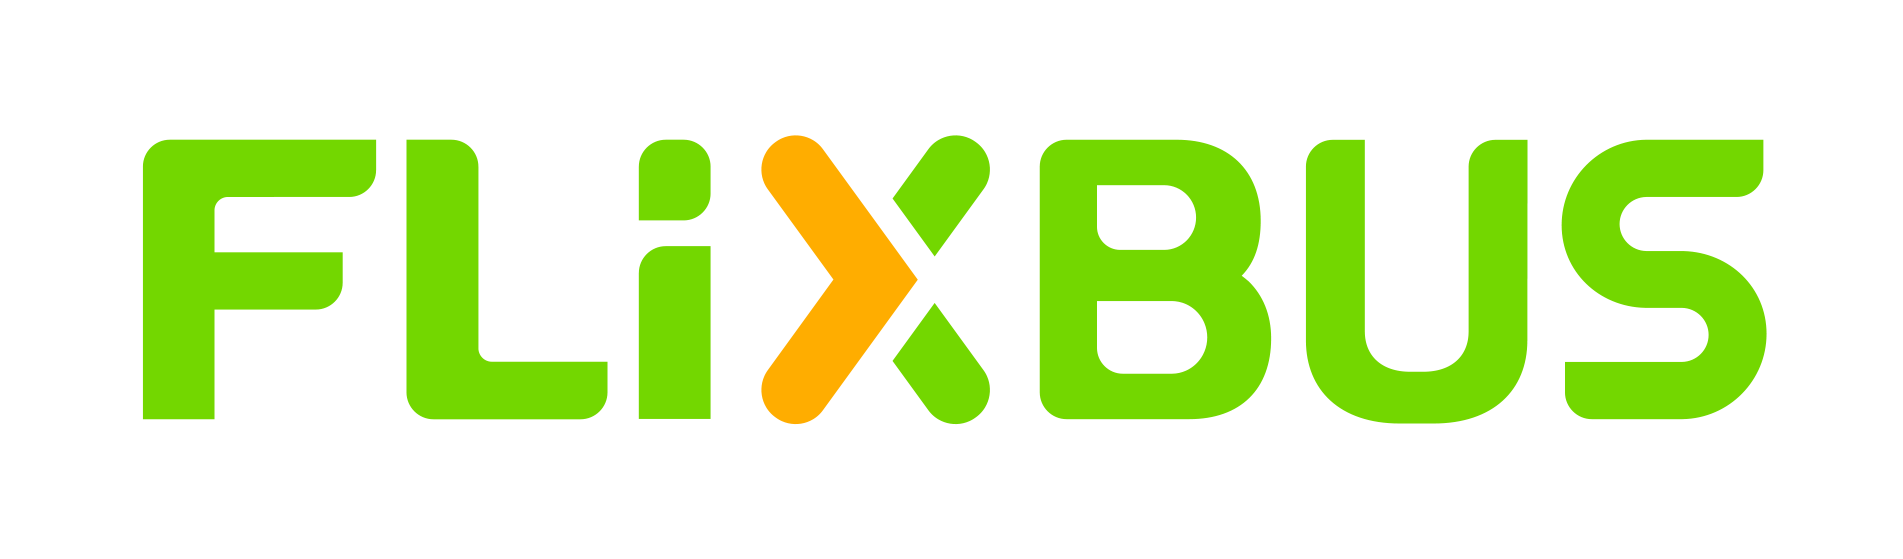 flixbus_logo_rgb (2)